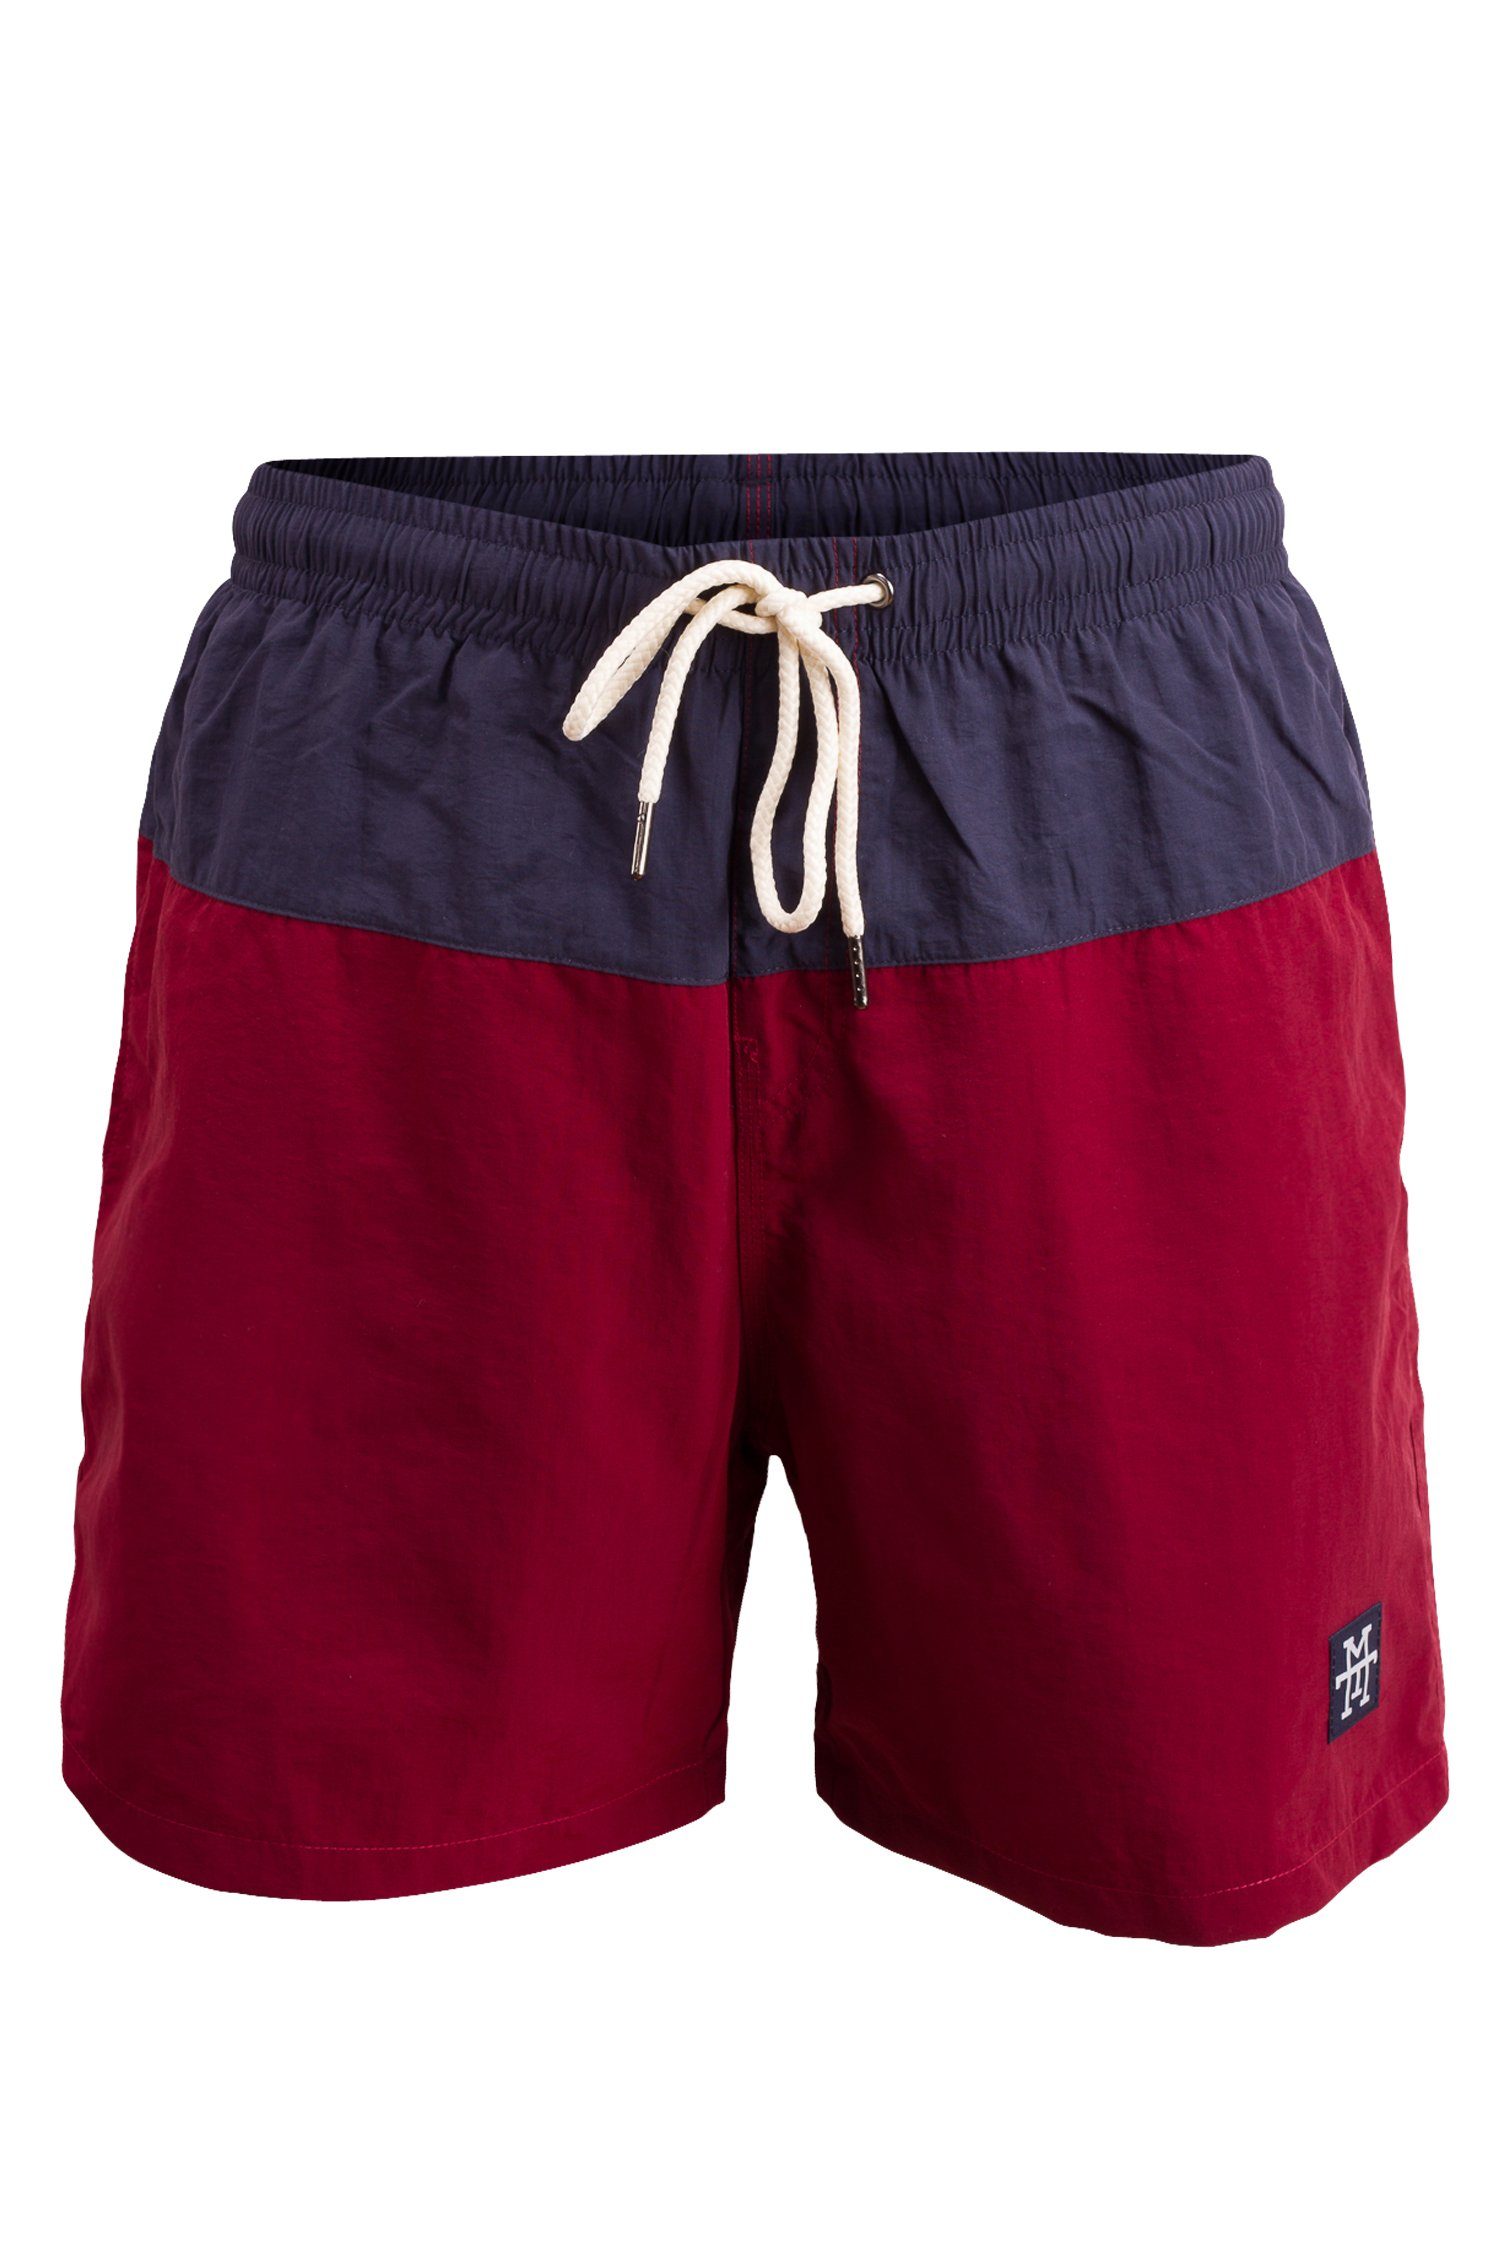 Manufaktur13 Badeshorts Swim Shorts - Badehosen schnelltrocknend Red/Navy